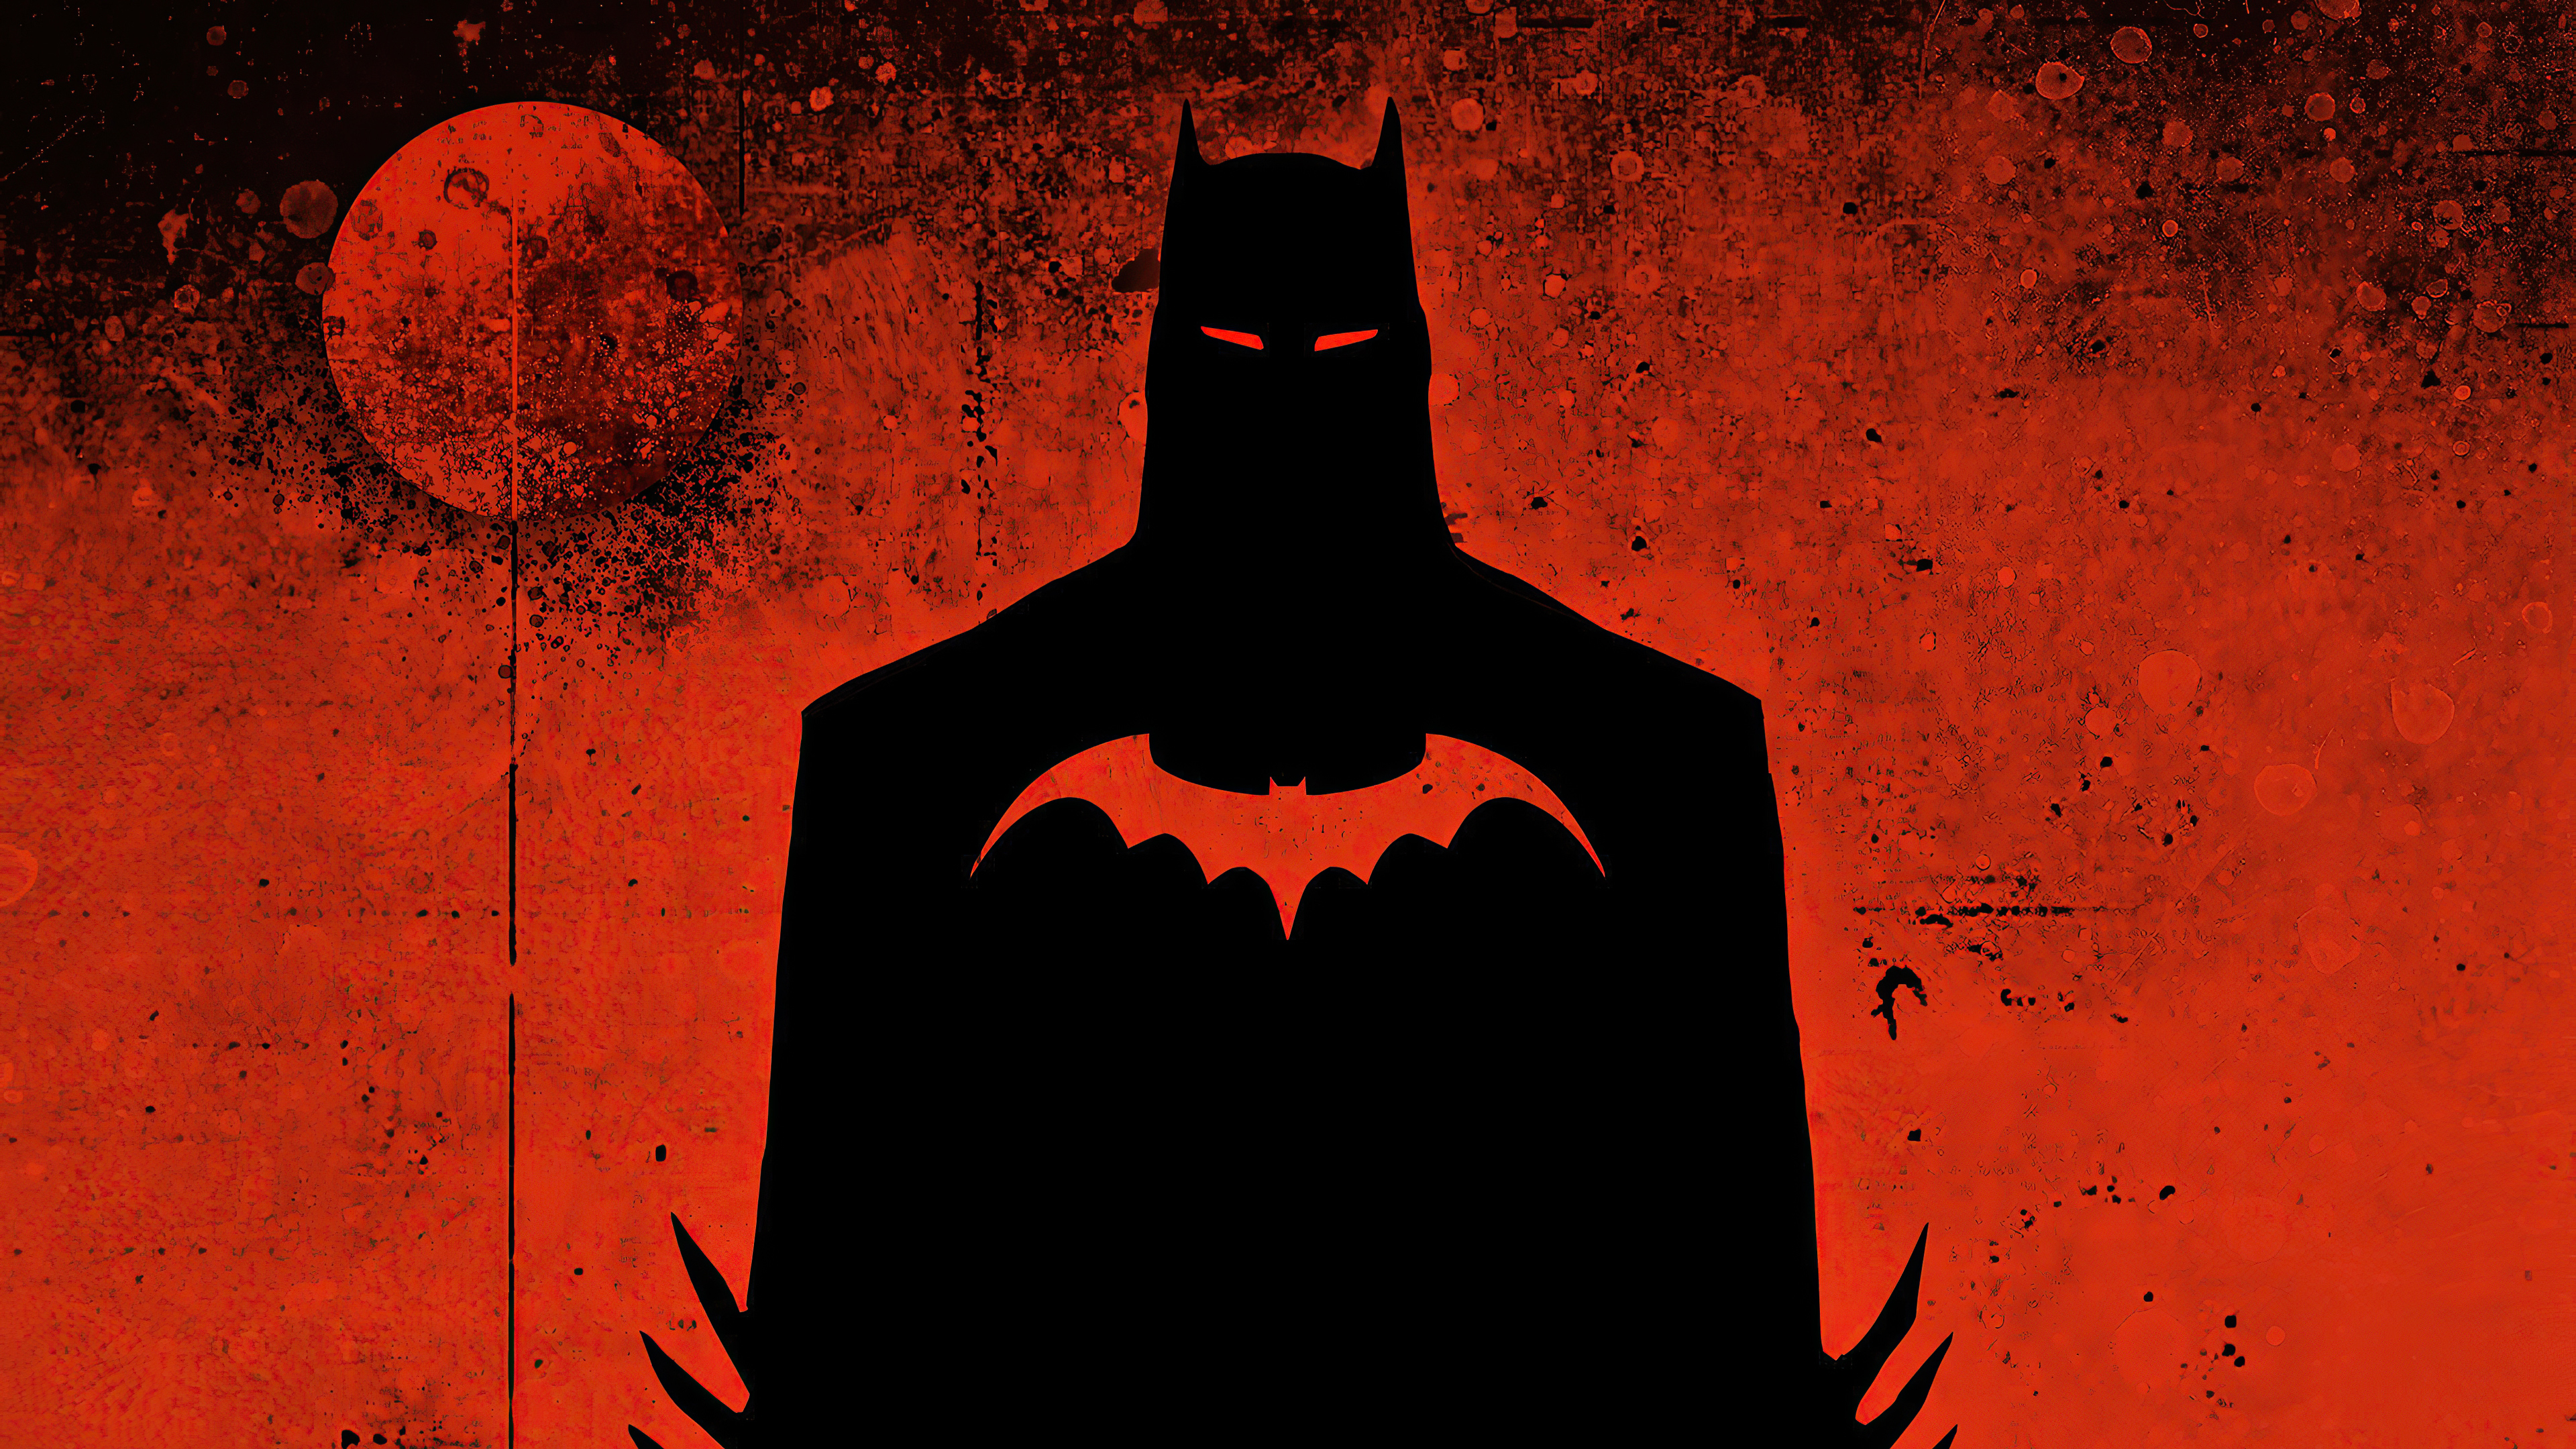 Batman New DC Comic 4K Wallpaper, HD Superheroes 4K Wallpapers, Images